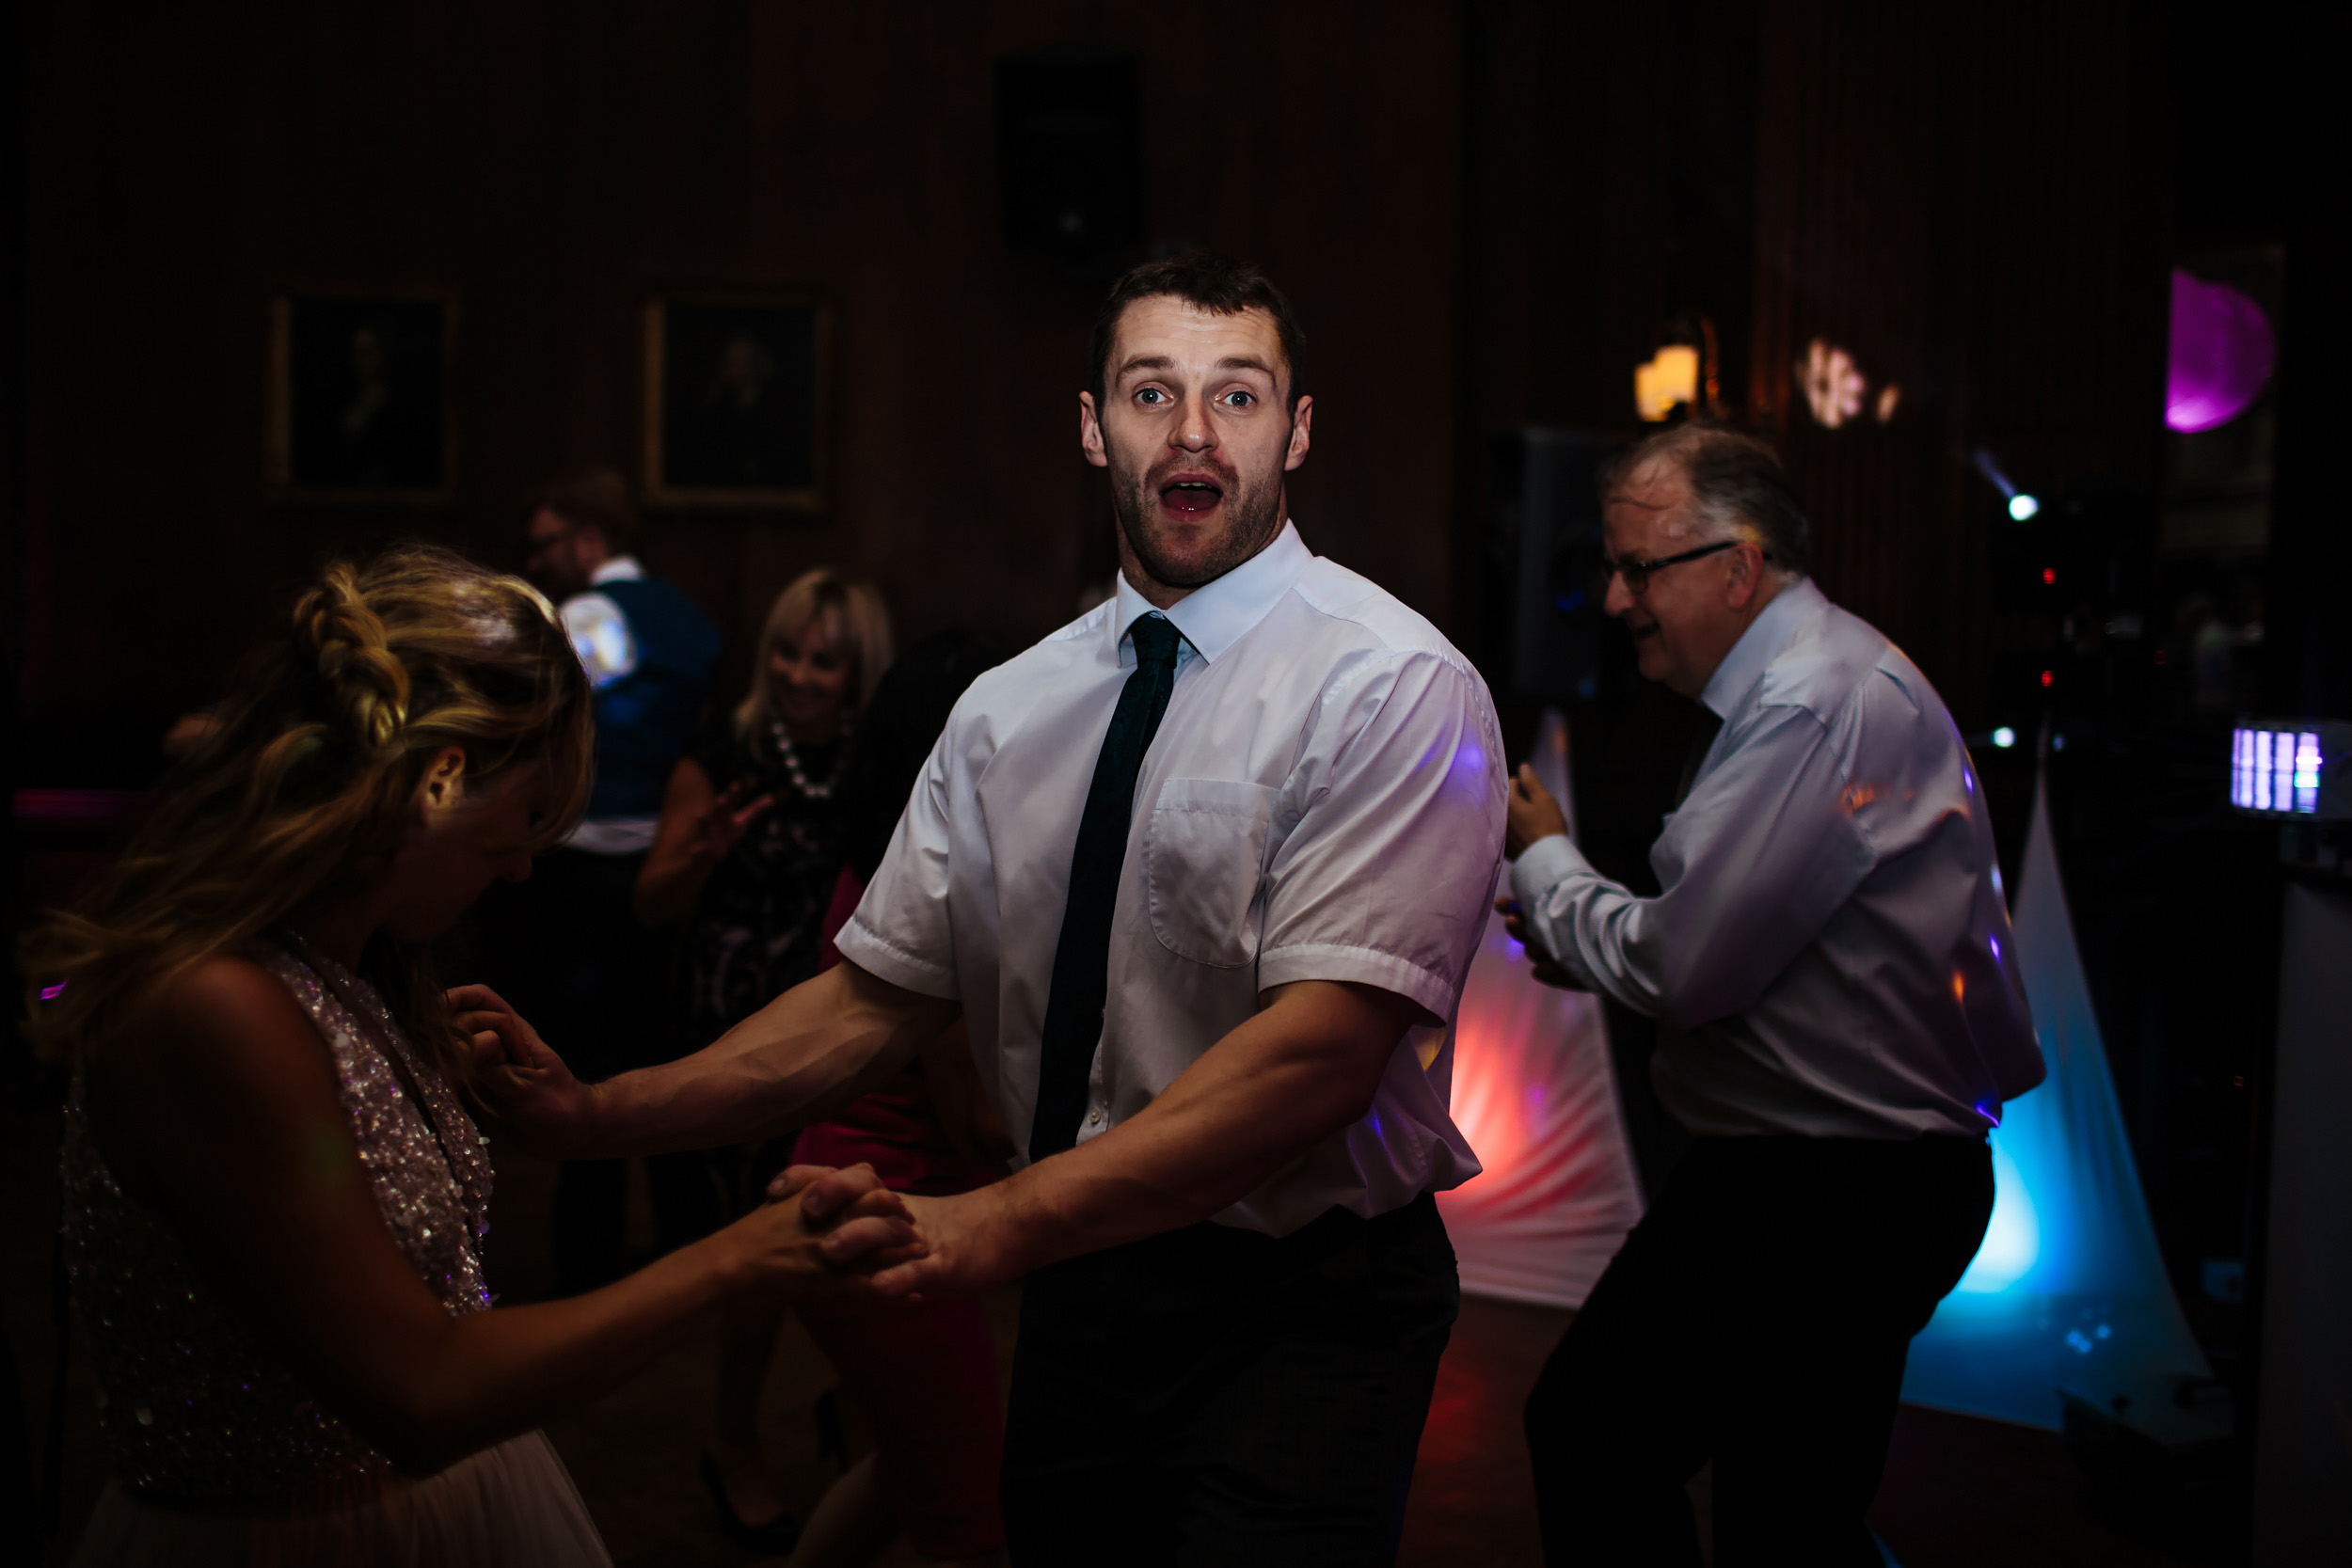 Guests dancing at a wedding disco